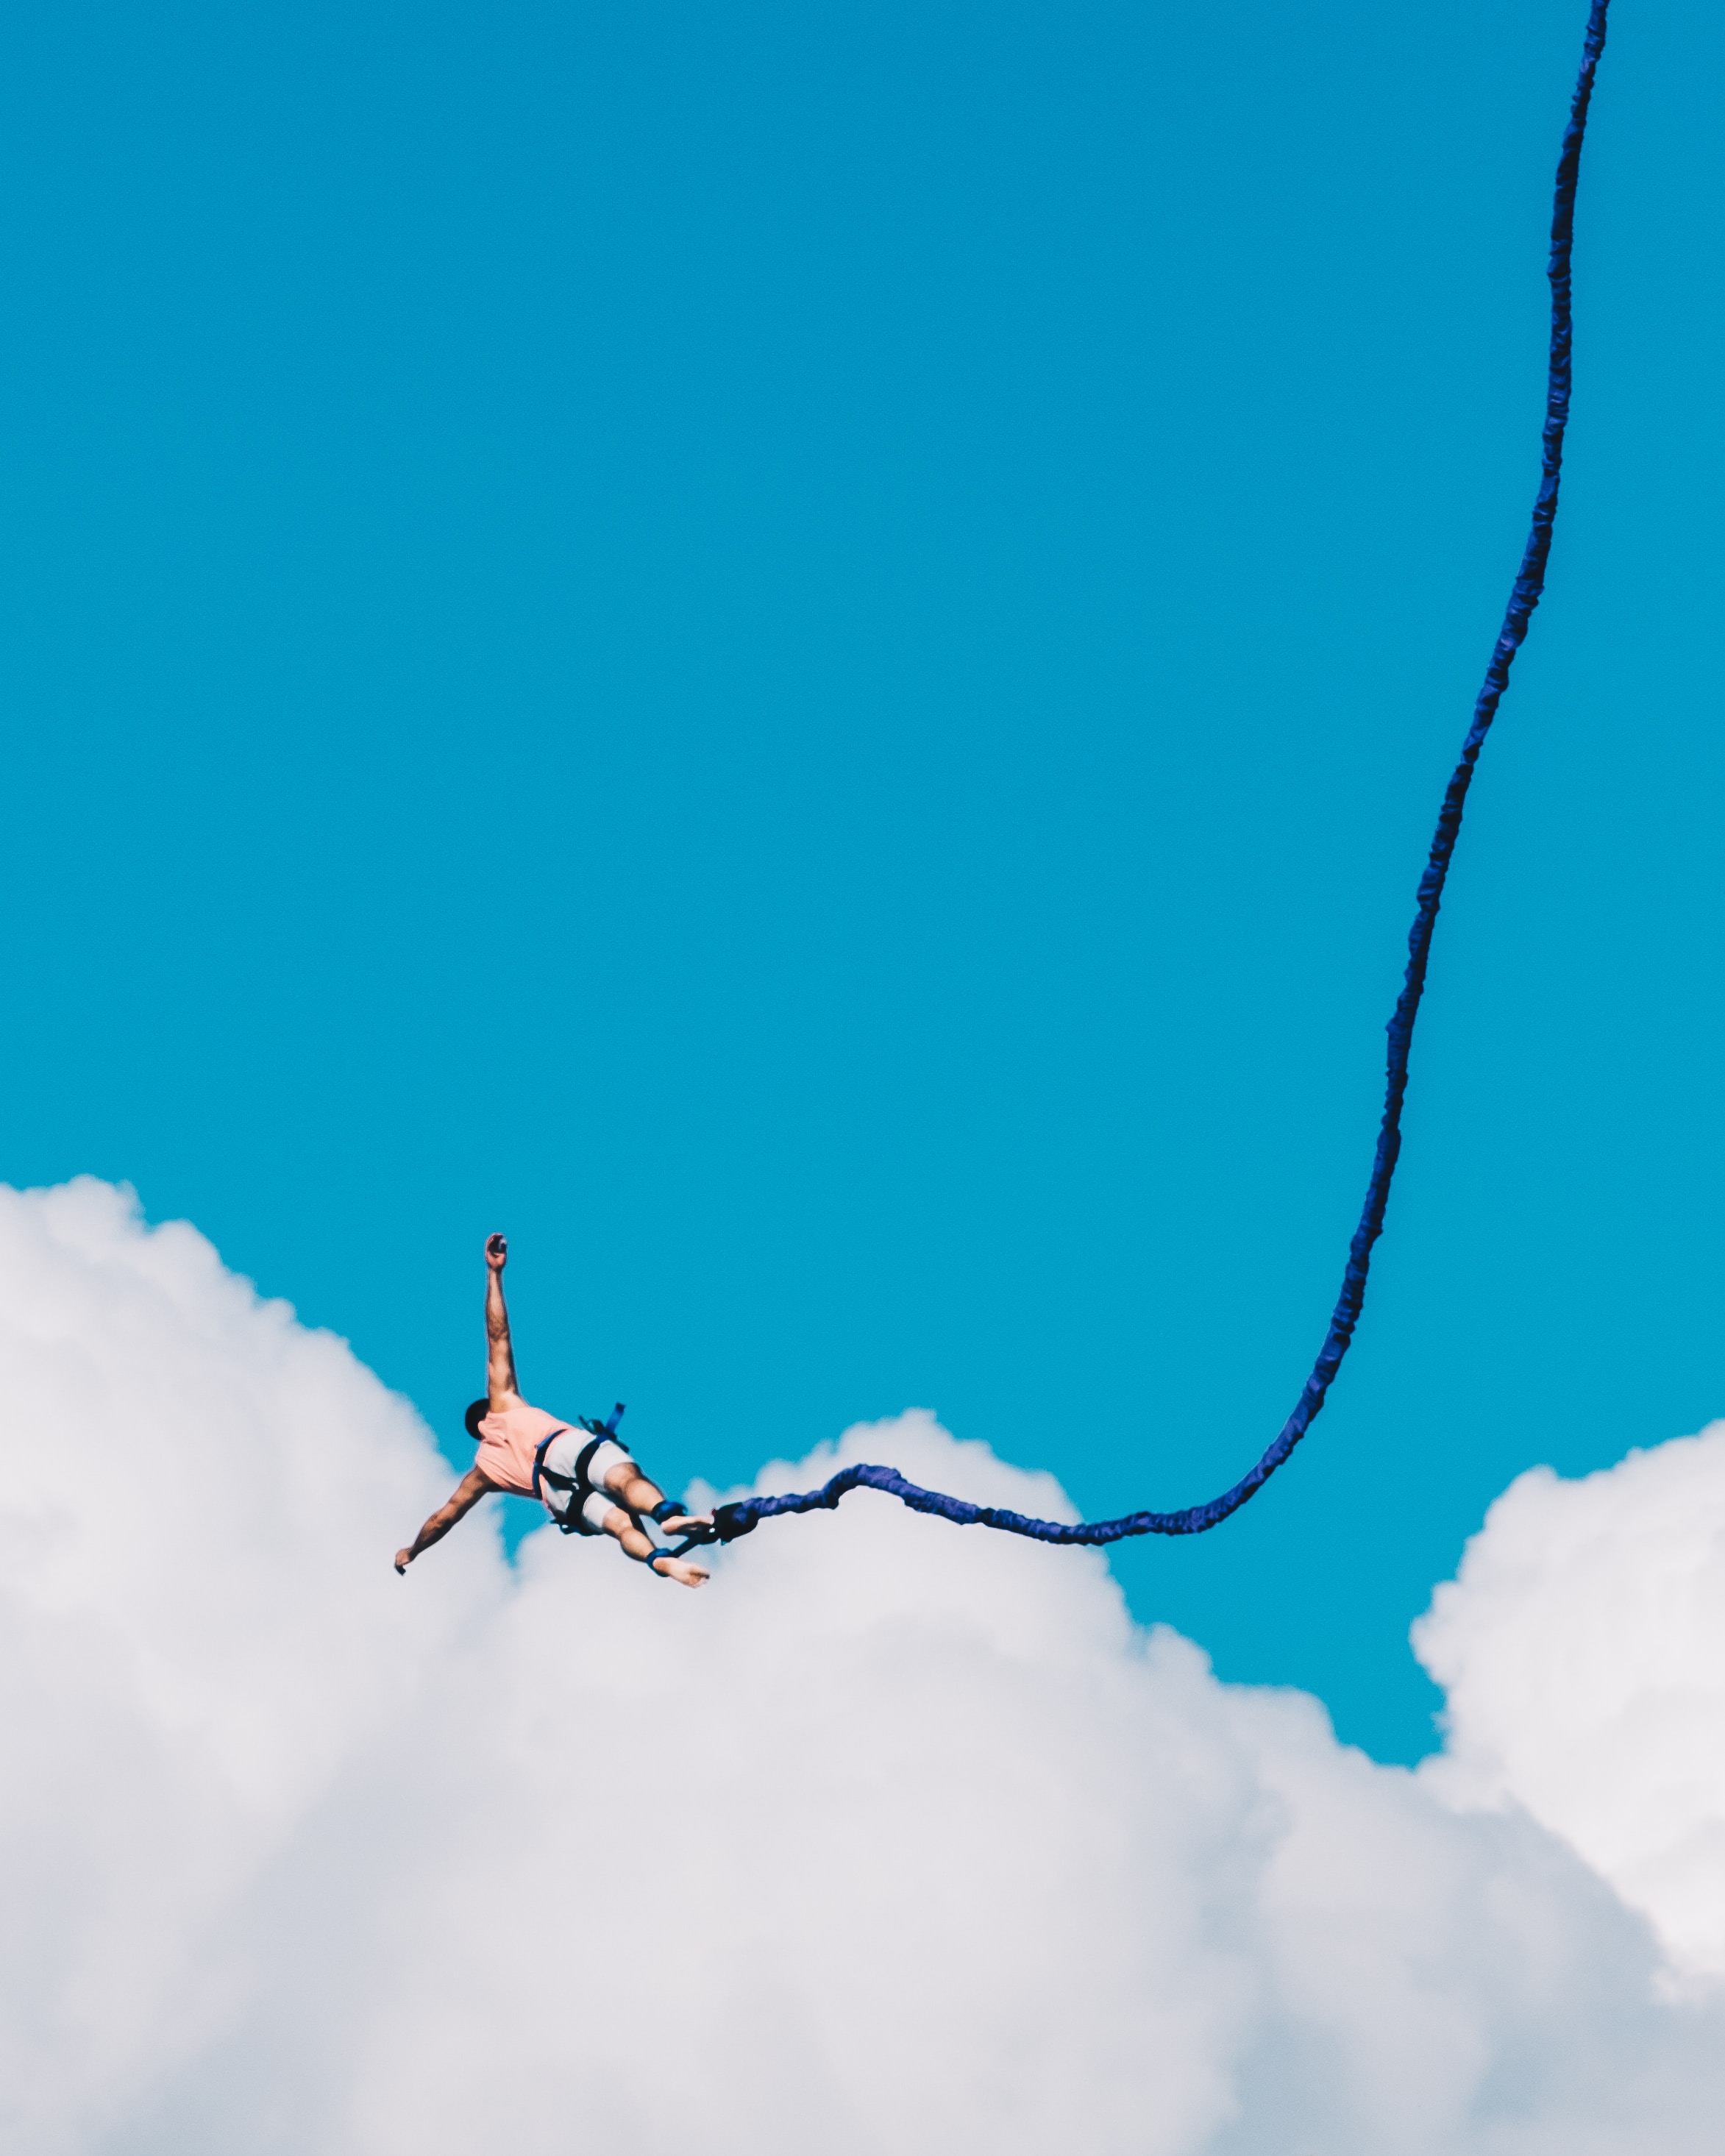 A man bungee jumping. | Source: Unsplash